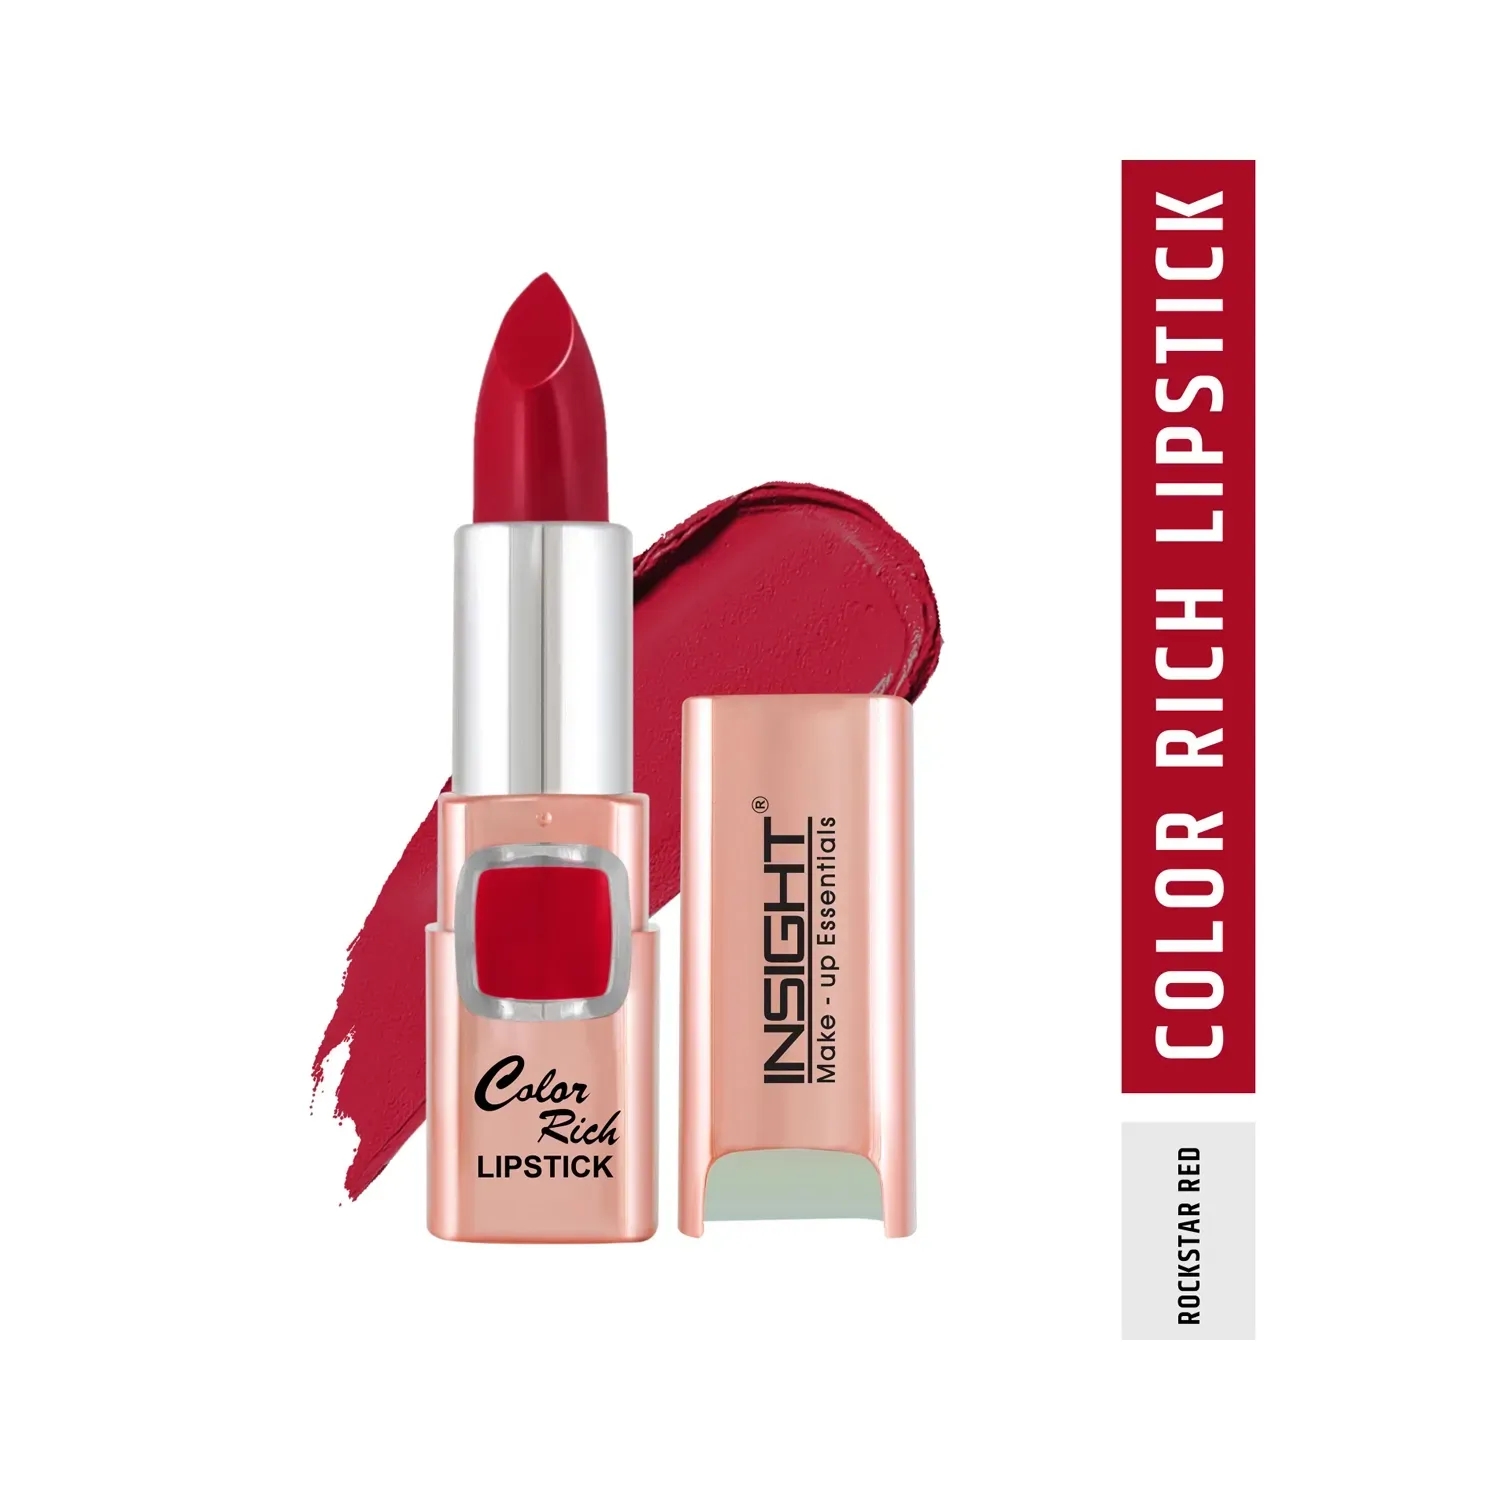 Insight Cosmetics | Insight Cosmetics Color Rich Lipstick - Rockstar Red (4.2g)